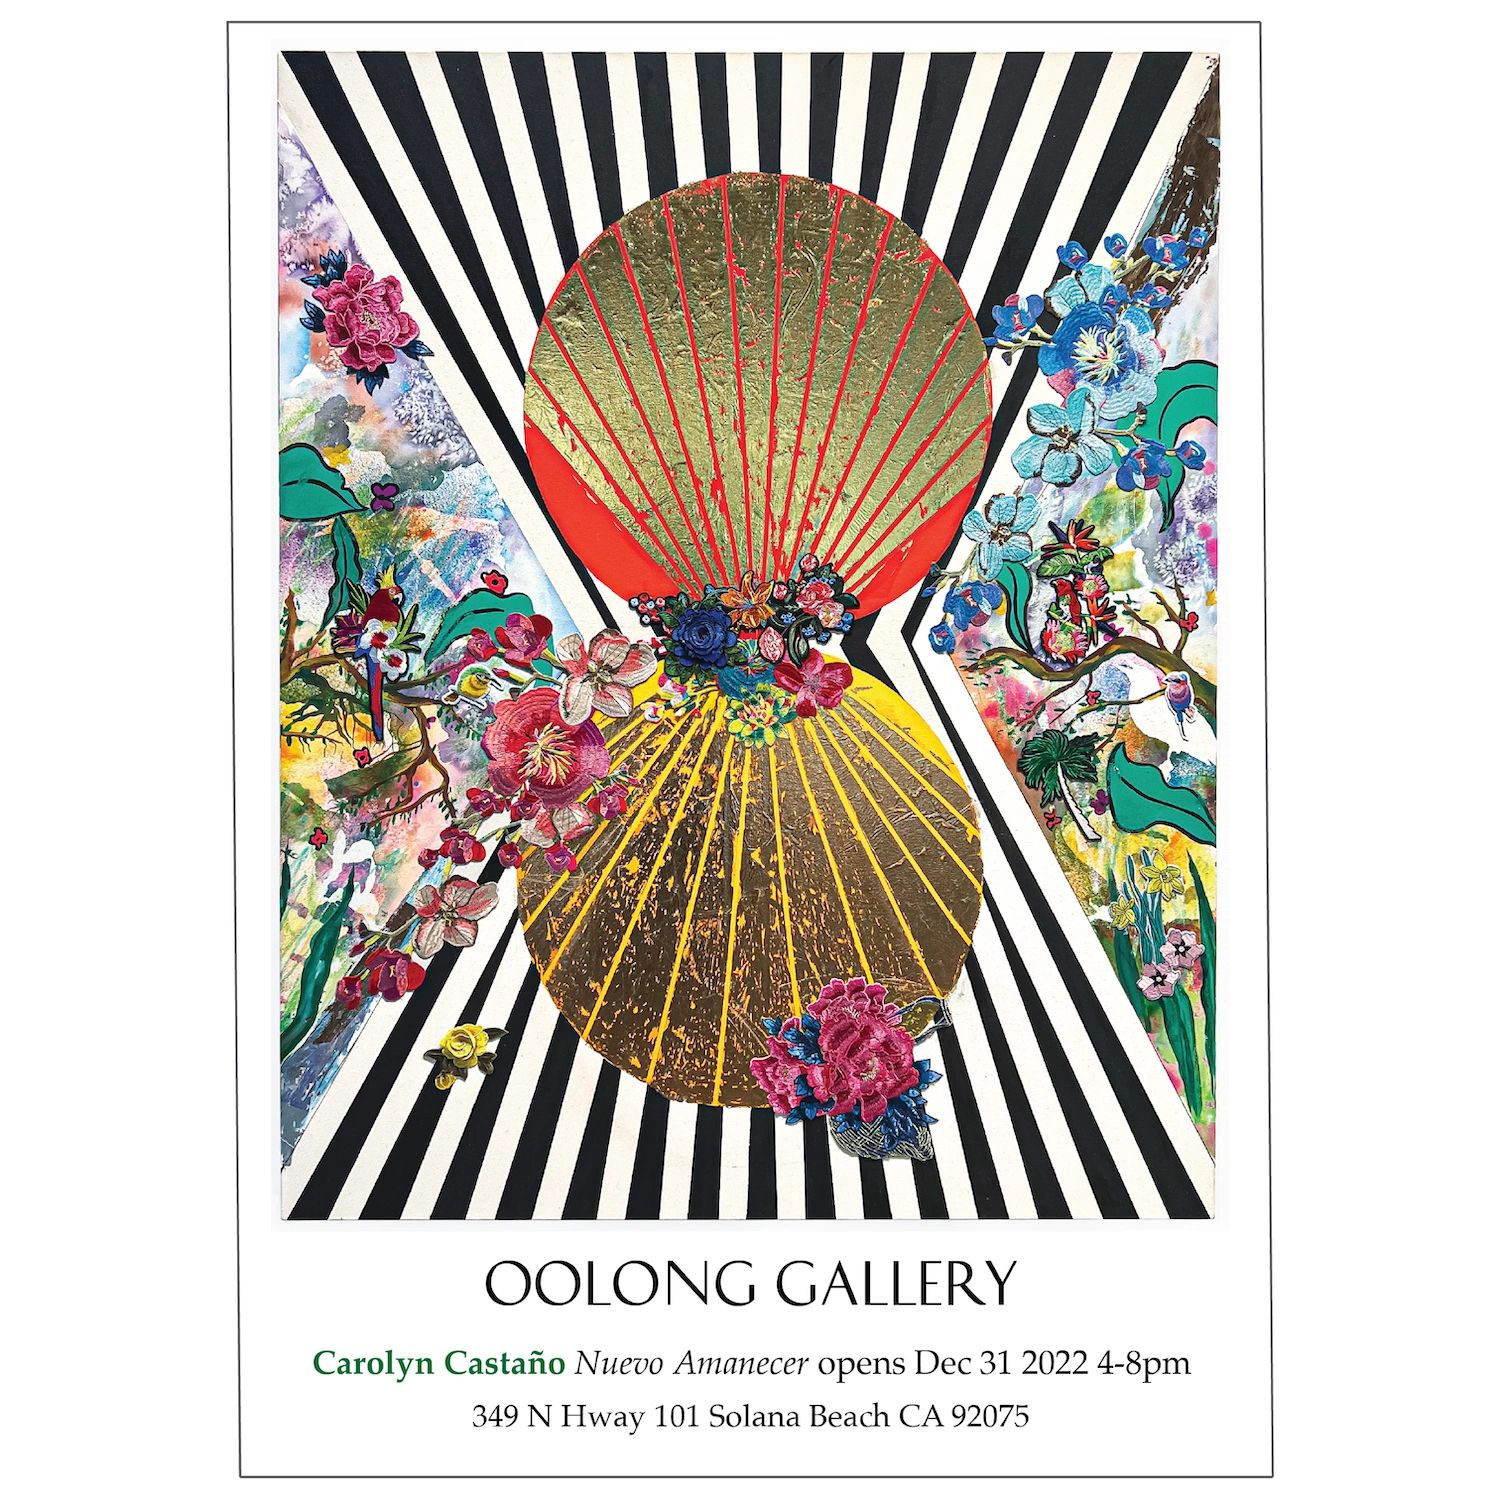 Carolyn Castaño Nuevo Amanecer opens Dec 31 2022 4-8pm at Oolong Gallery in Solana Beach California 